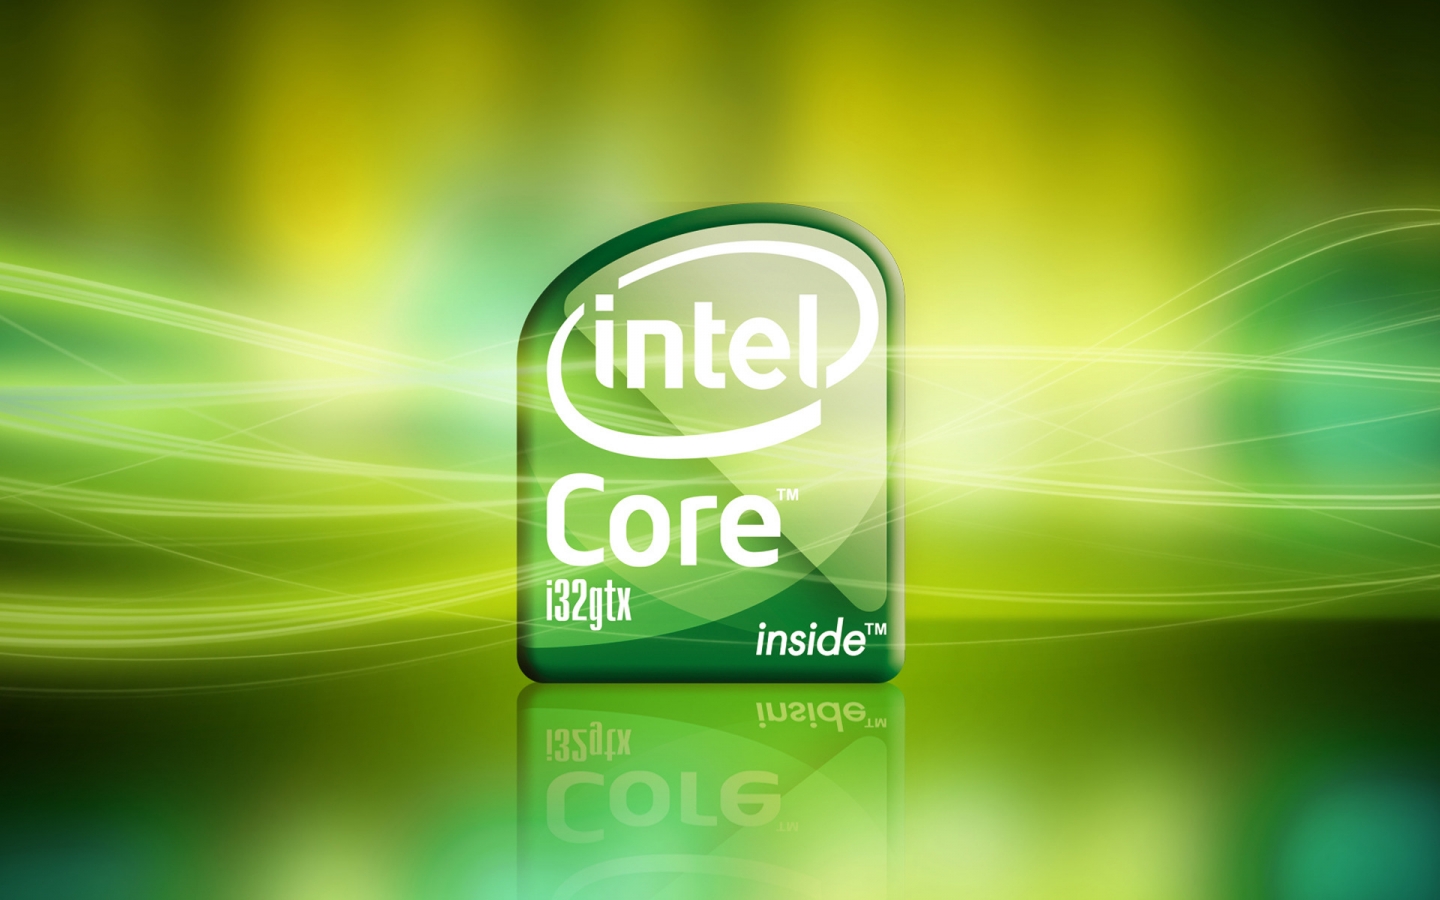 Intel Core i32gtx for 1440 x 900 widescreen resolution